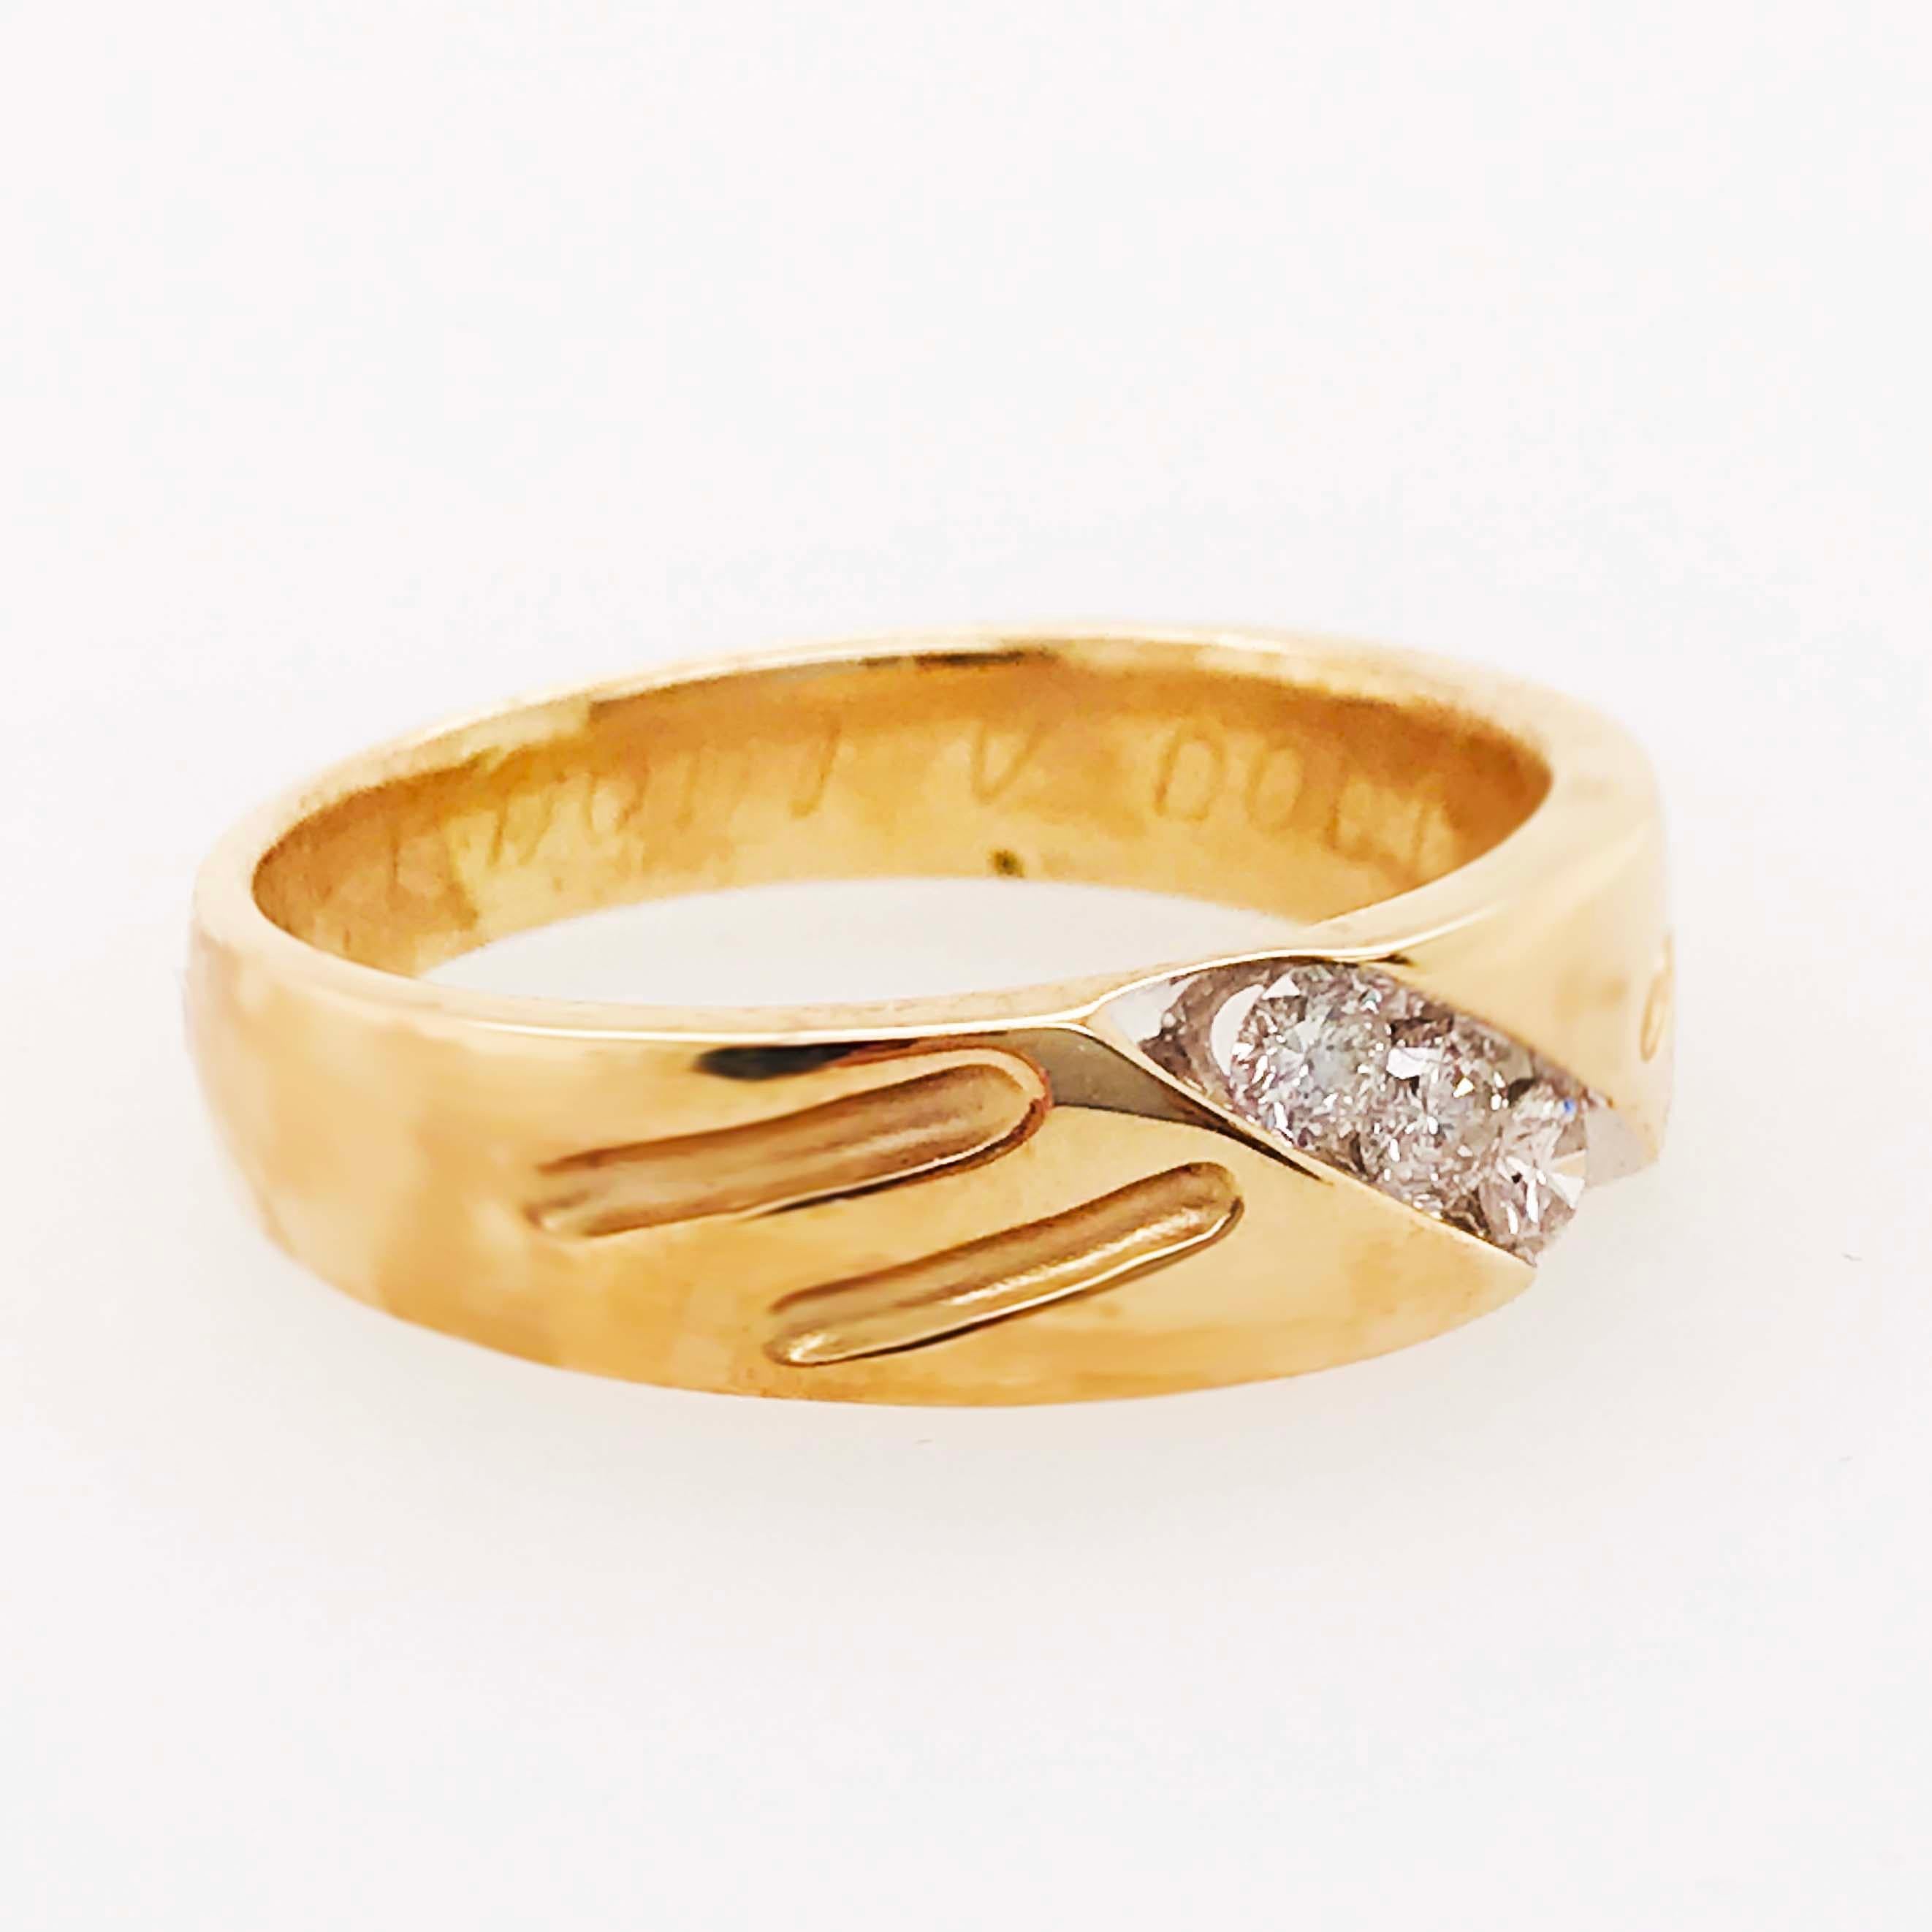 18k white & yellow solid gold engraved jewish wedding ring